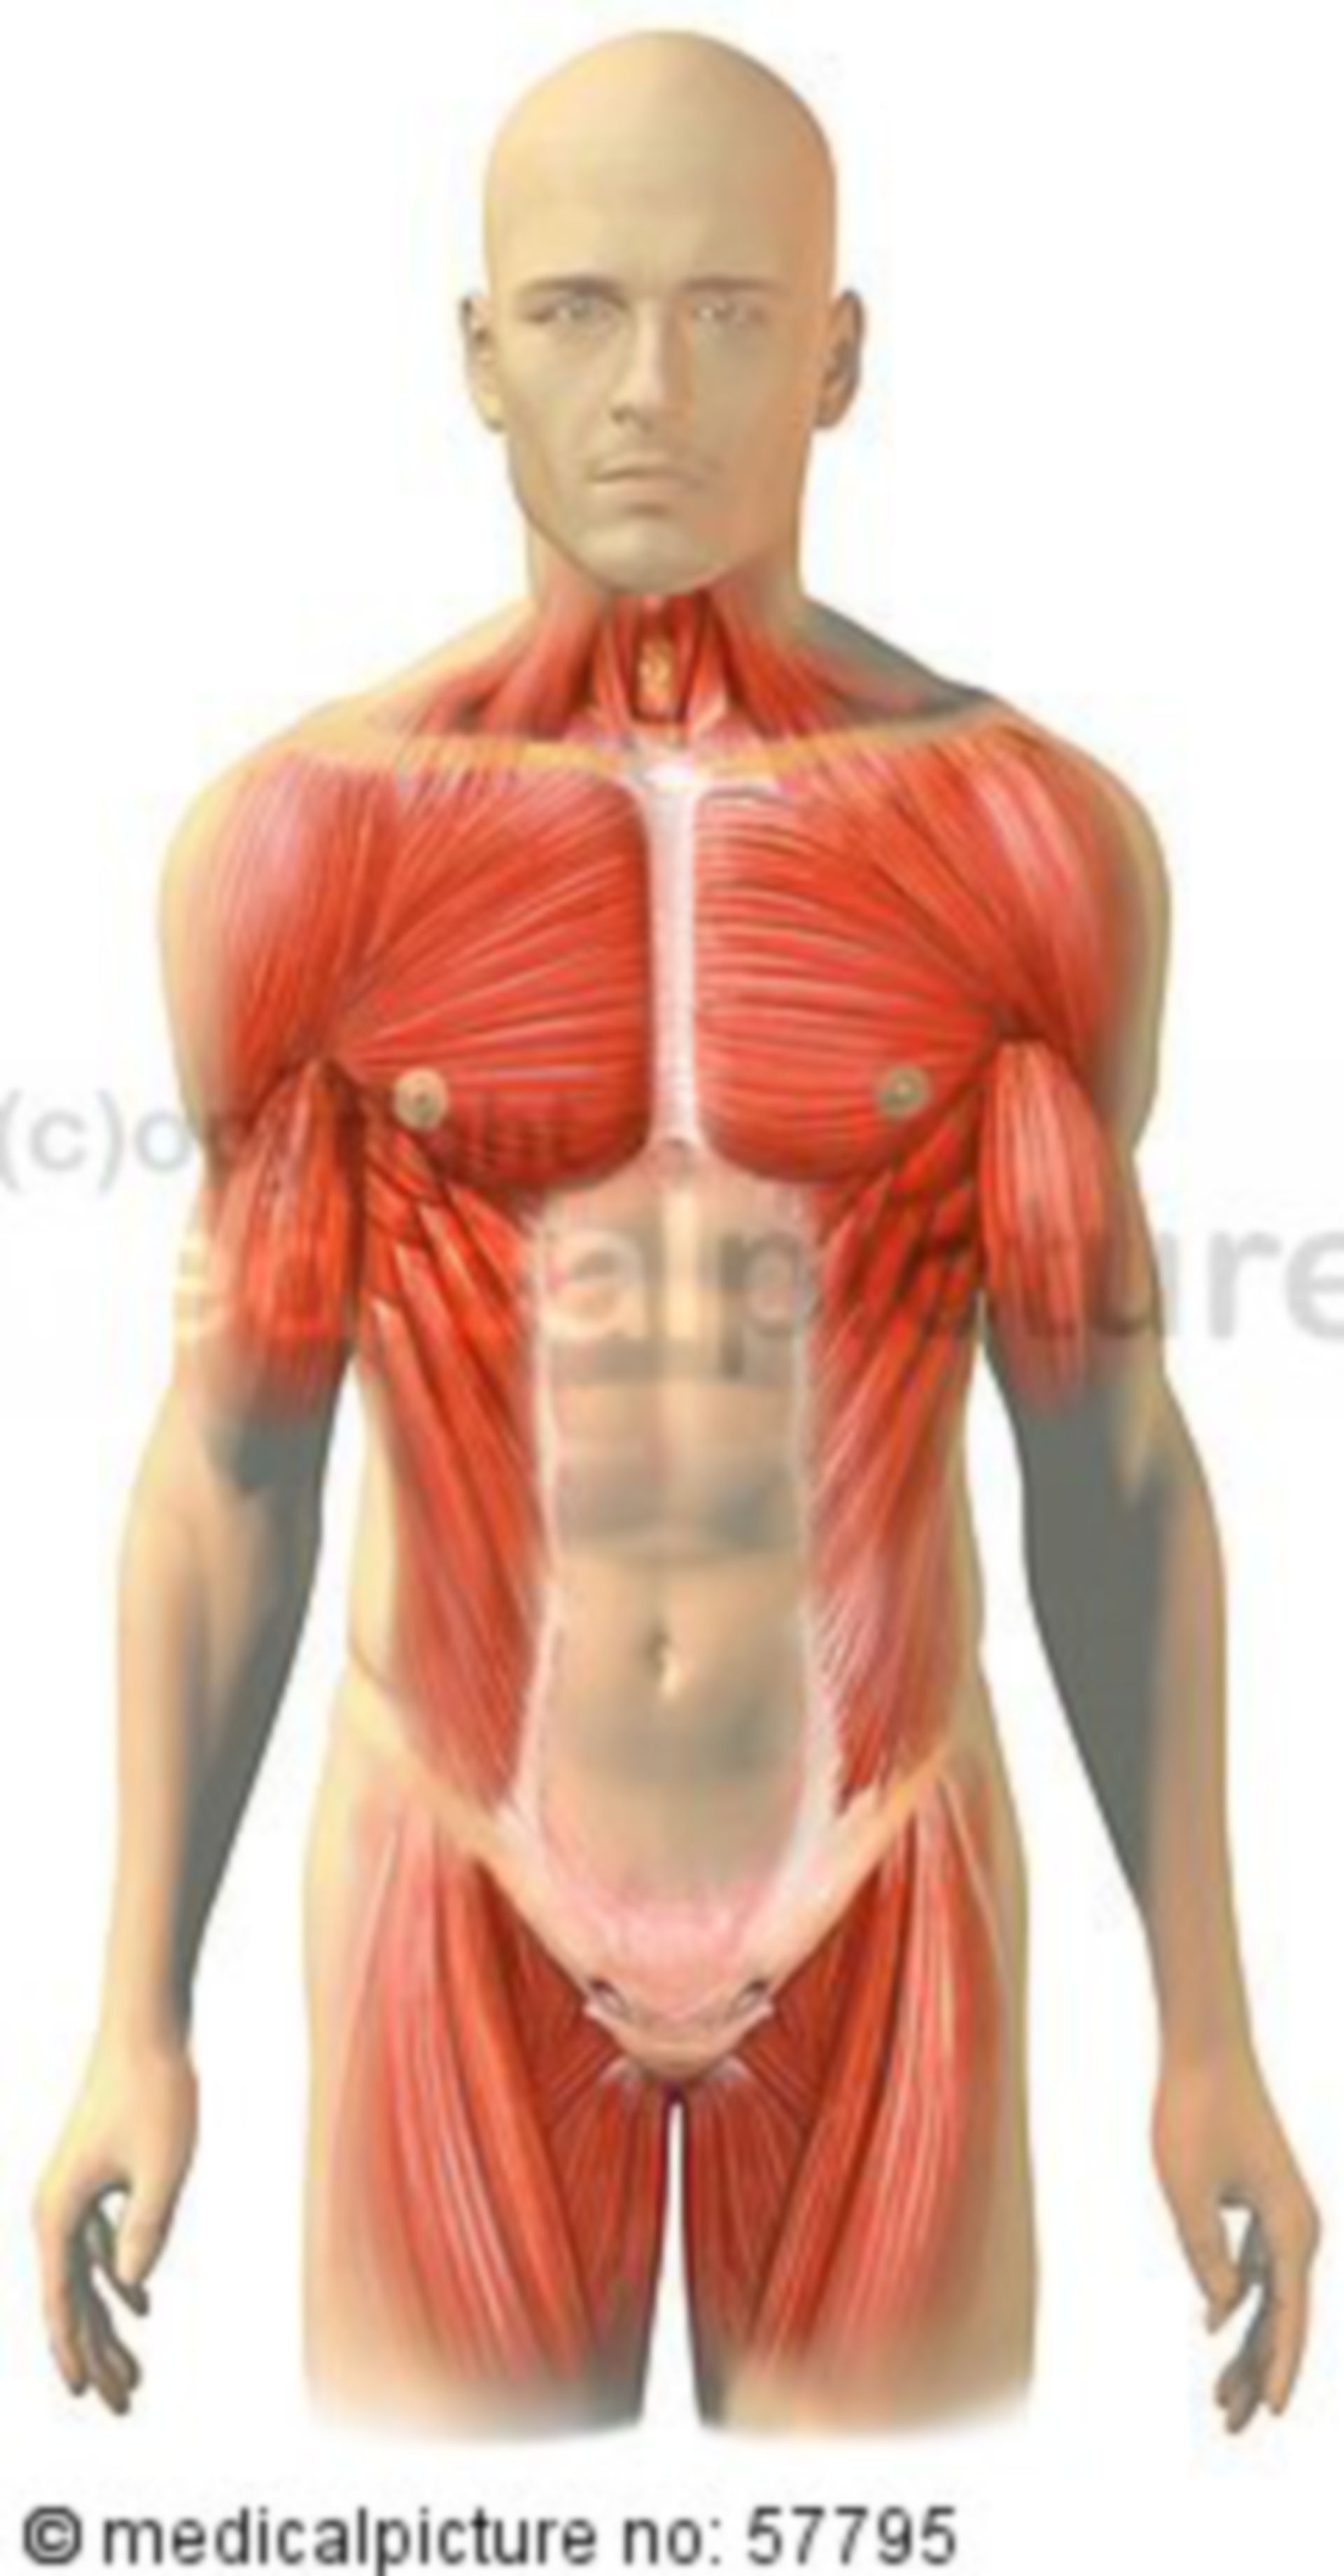 Anatomical illustrations - skeletal muscles